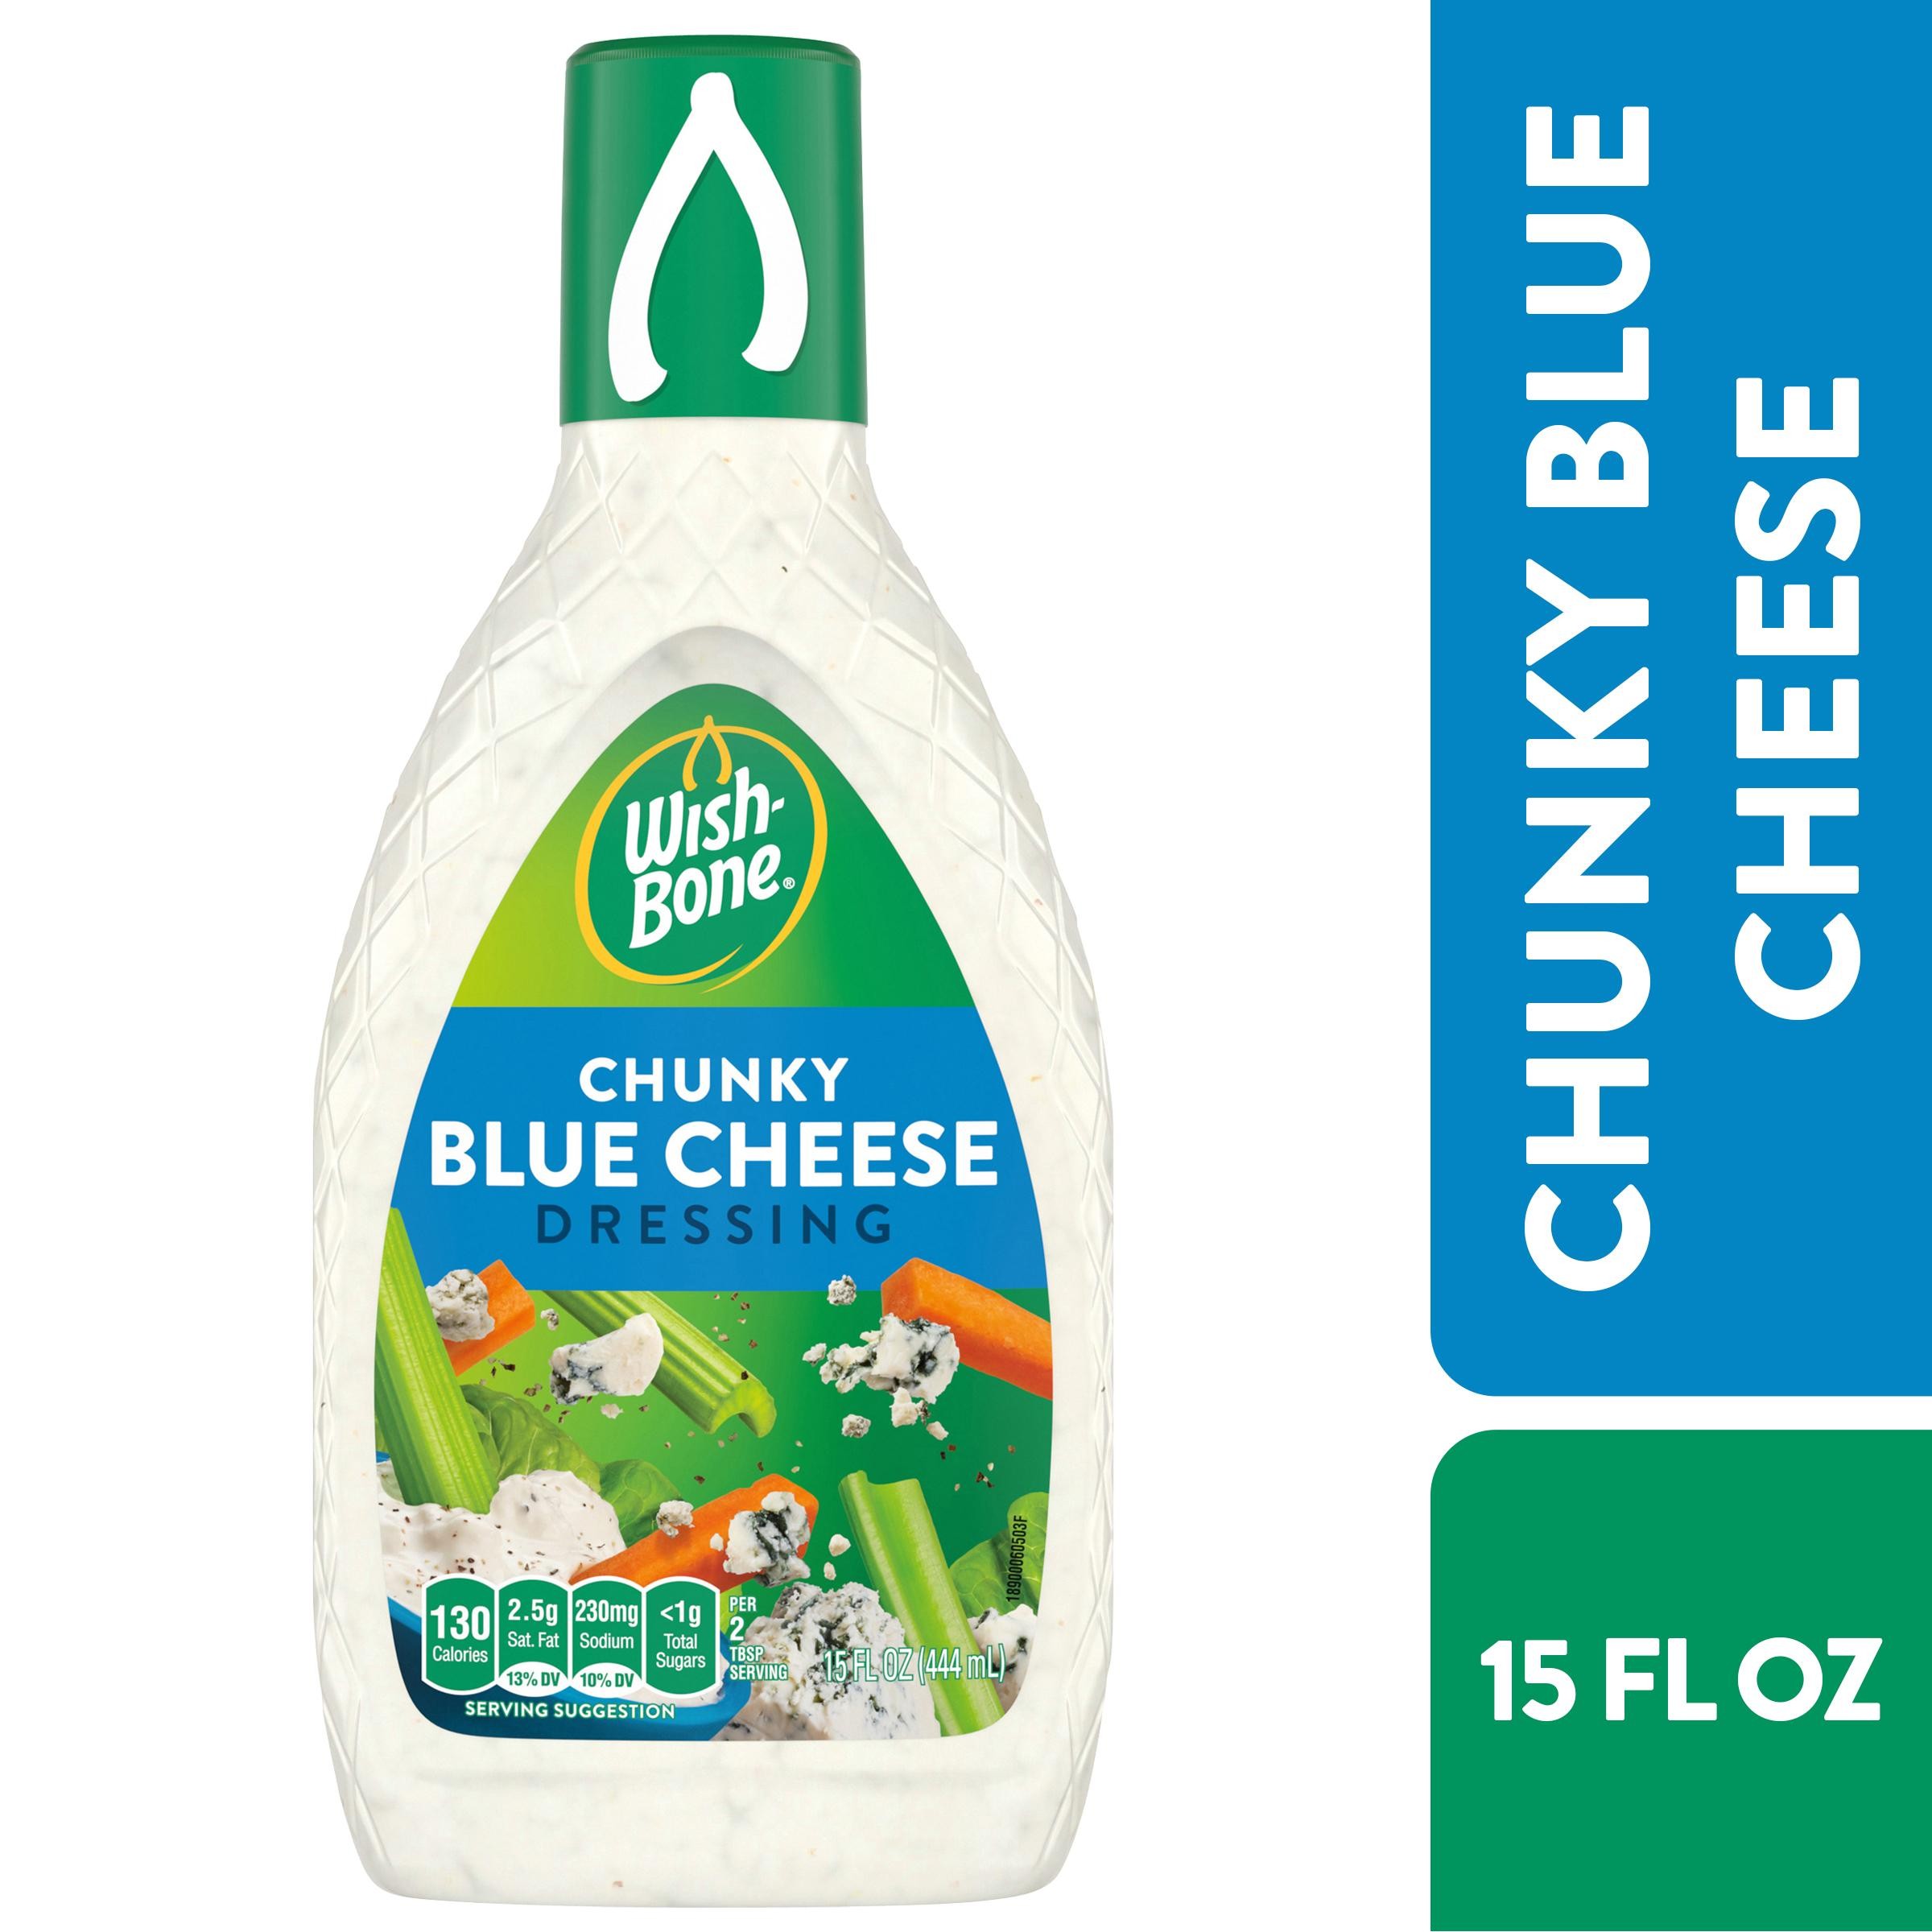 Wish-Bone Chunky Blue Cheese Dressing 15 FL OZ